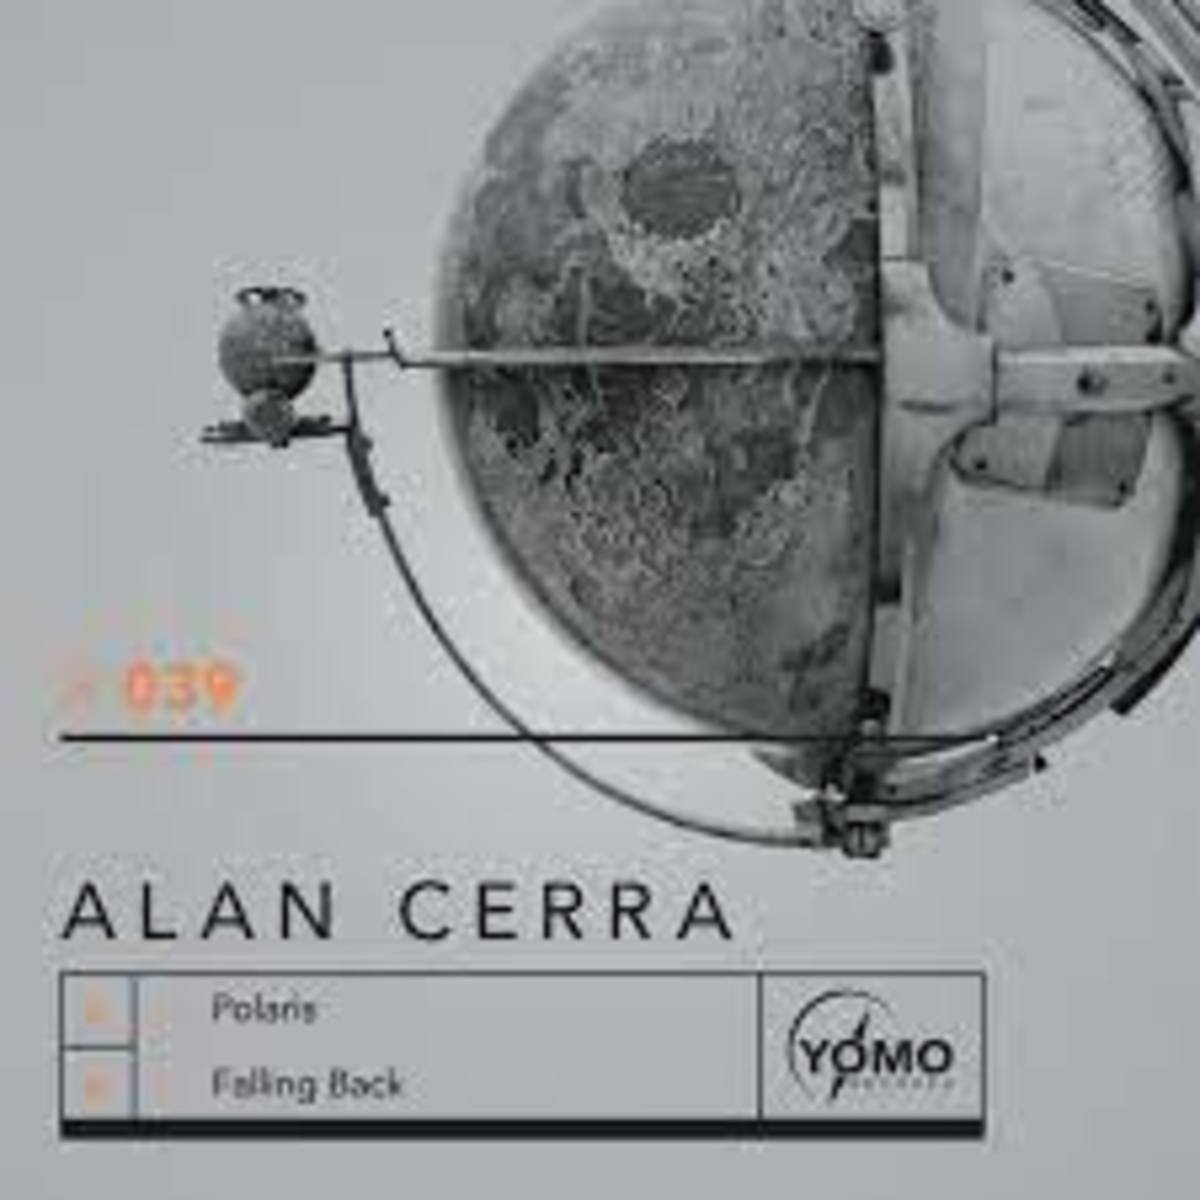 "FALLING BACK (ORIGINAL MIX)" - ALAN CERRA [YOMO RECORDS]